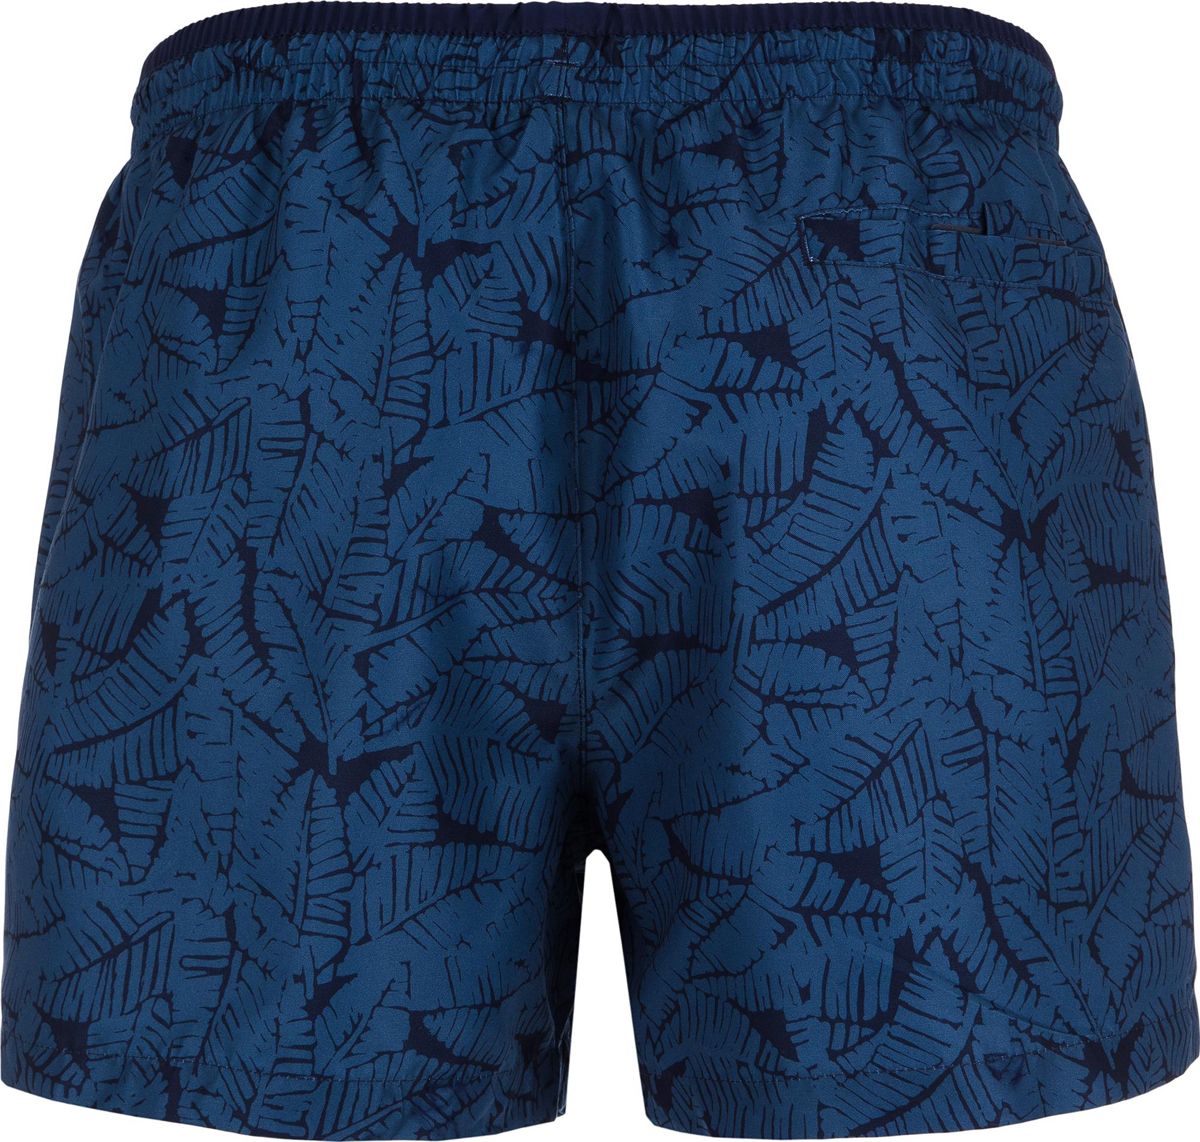     Joss Men's shorts, : . S17AJSSHM01-MM.  48